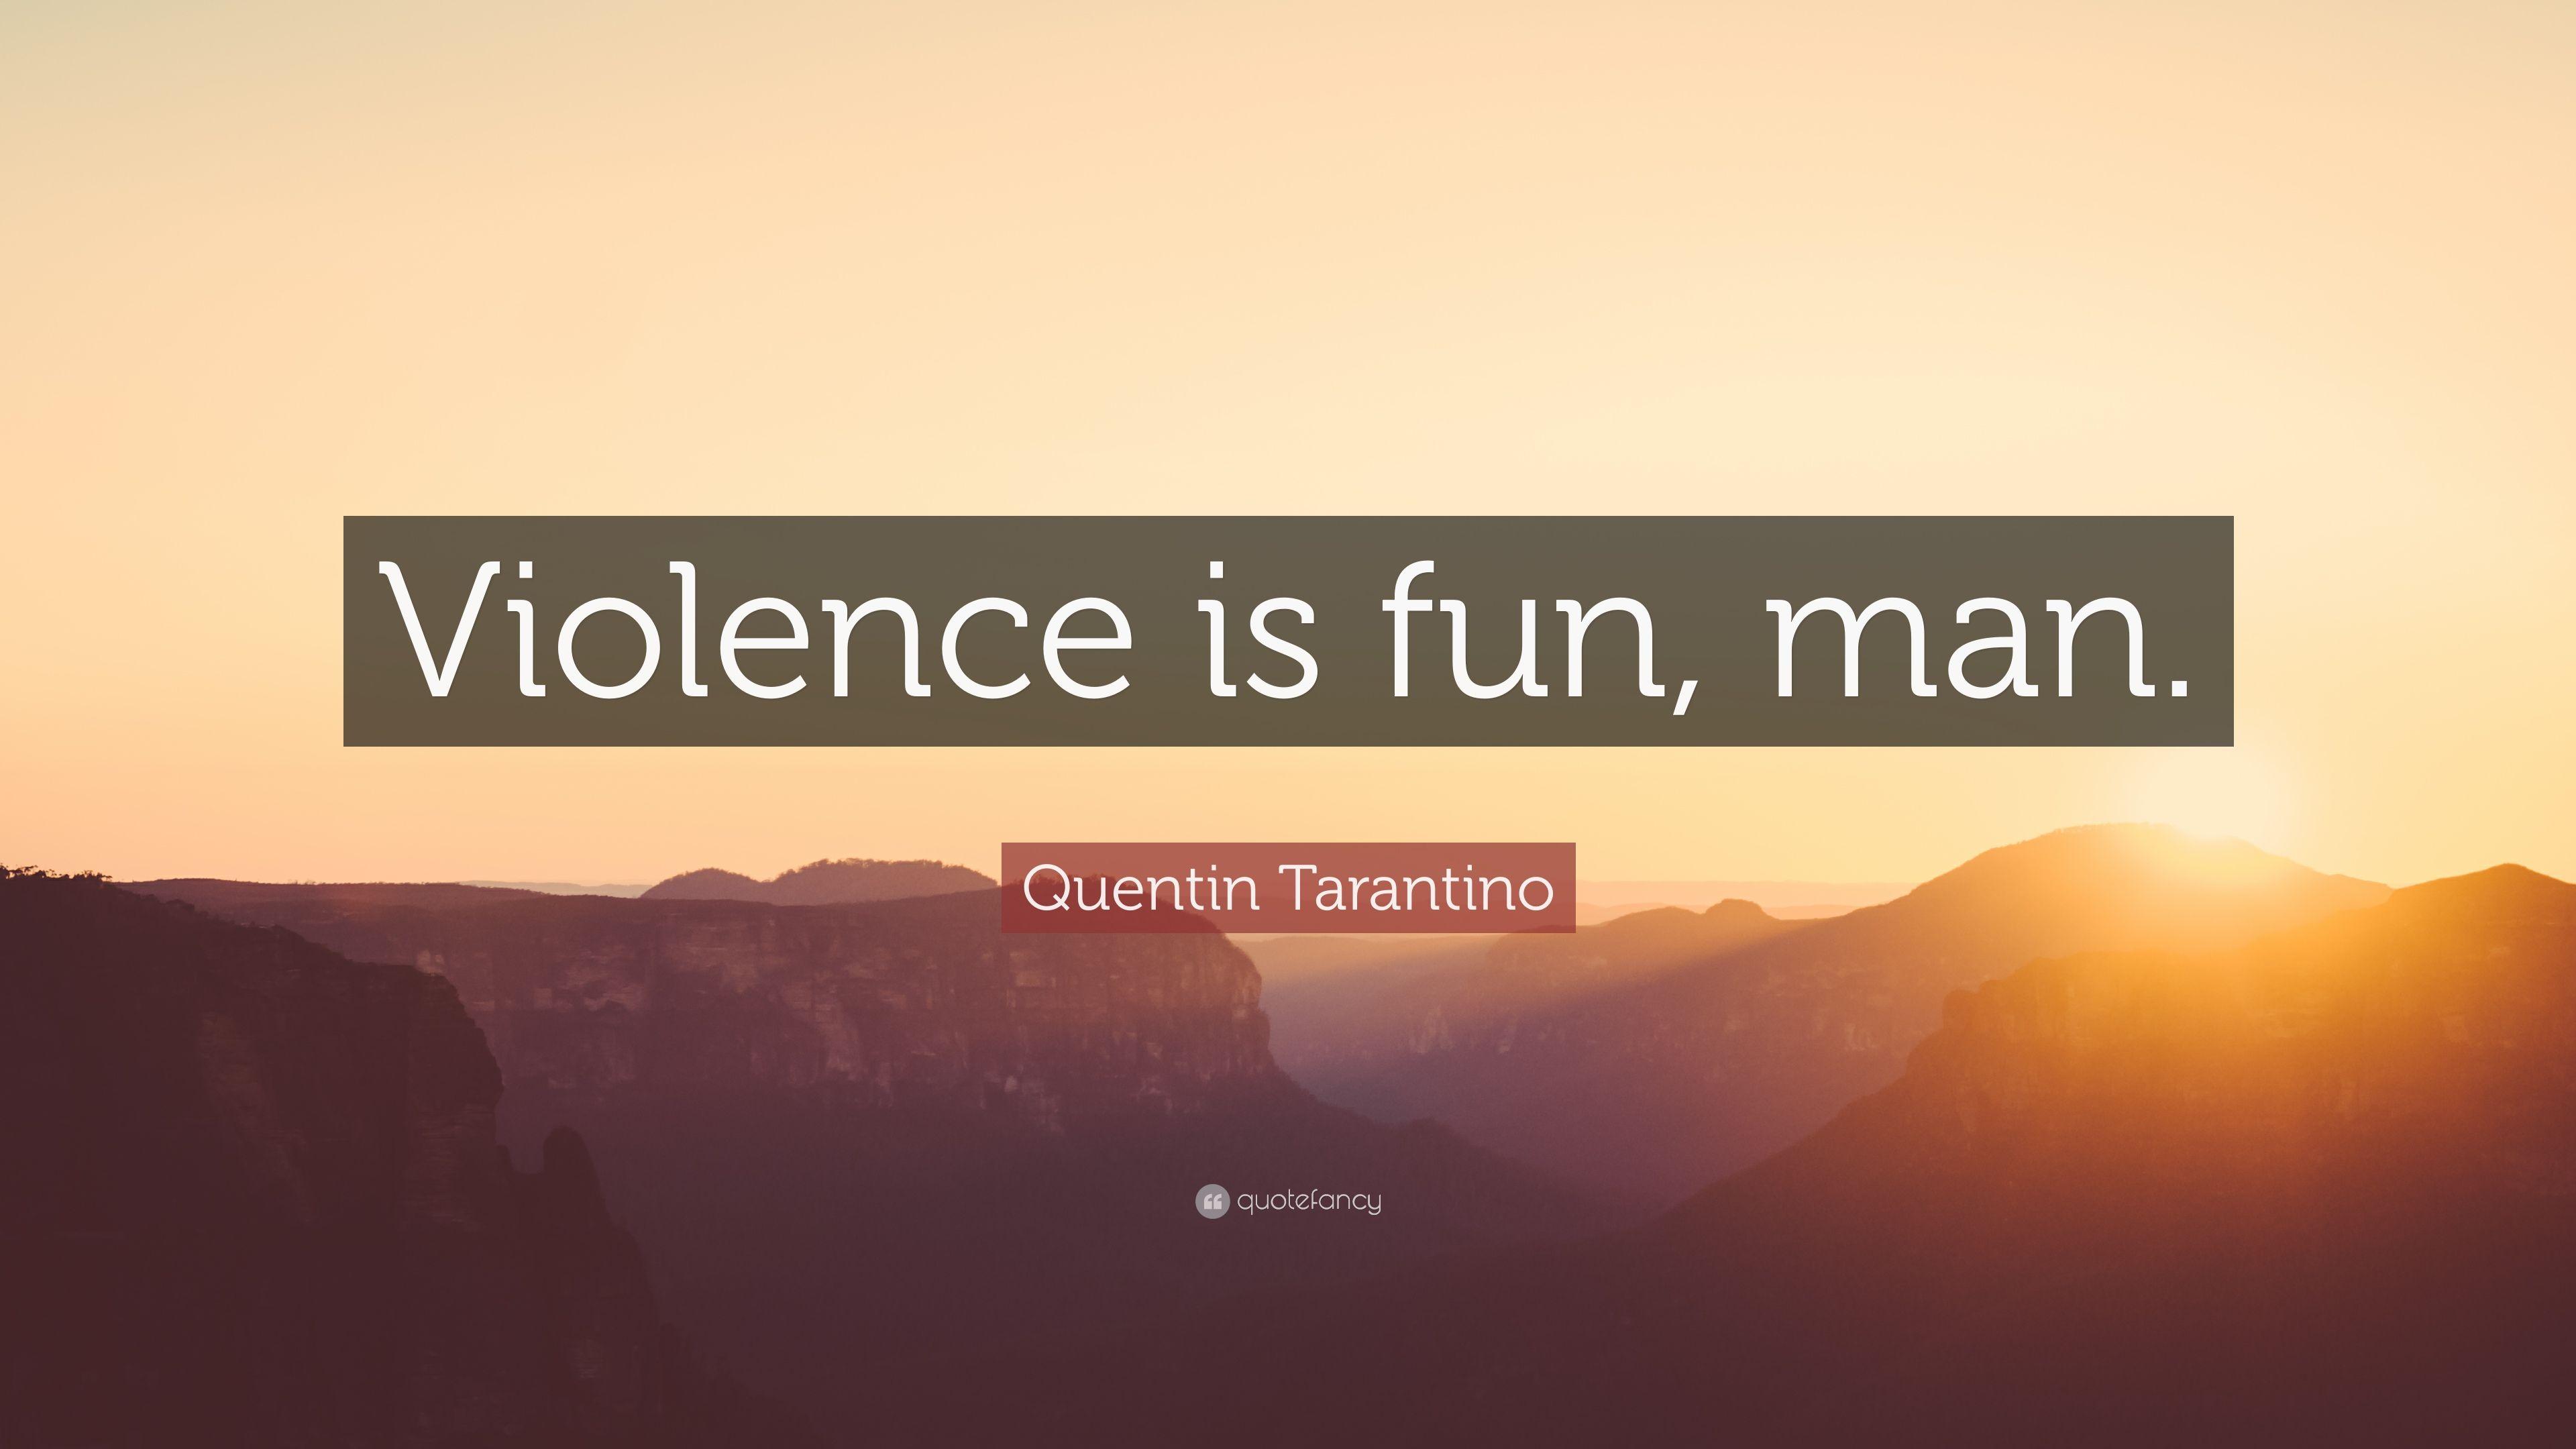 Quentin Tarantino Quote: “Violence is fun, man.” 12 wallpaper